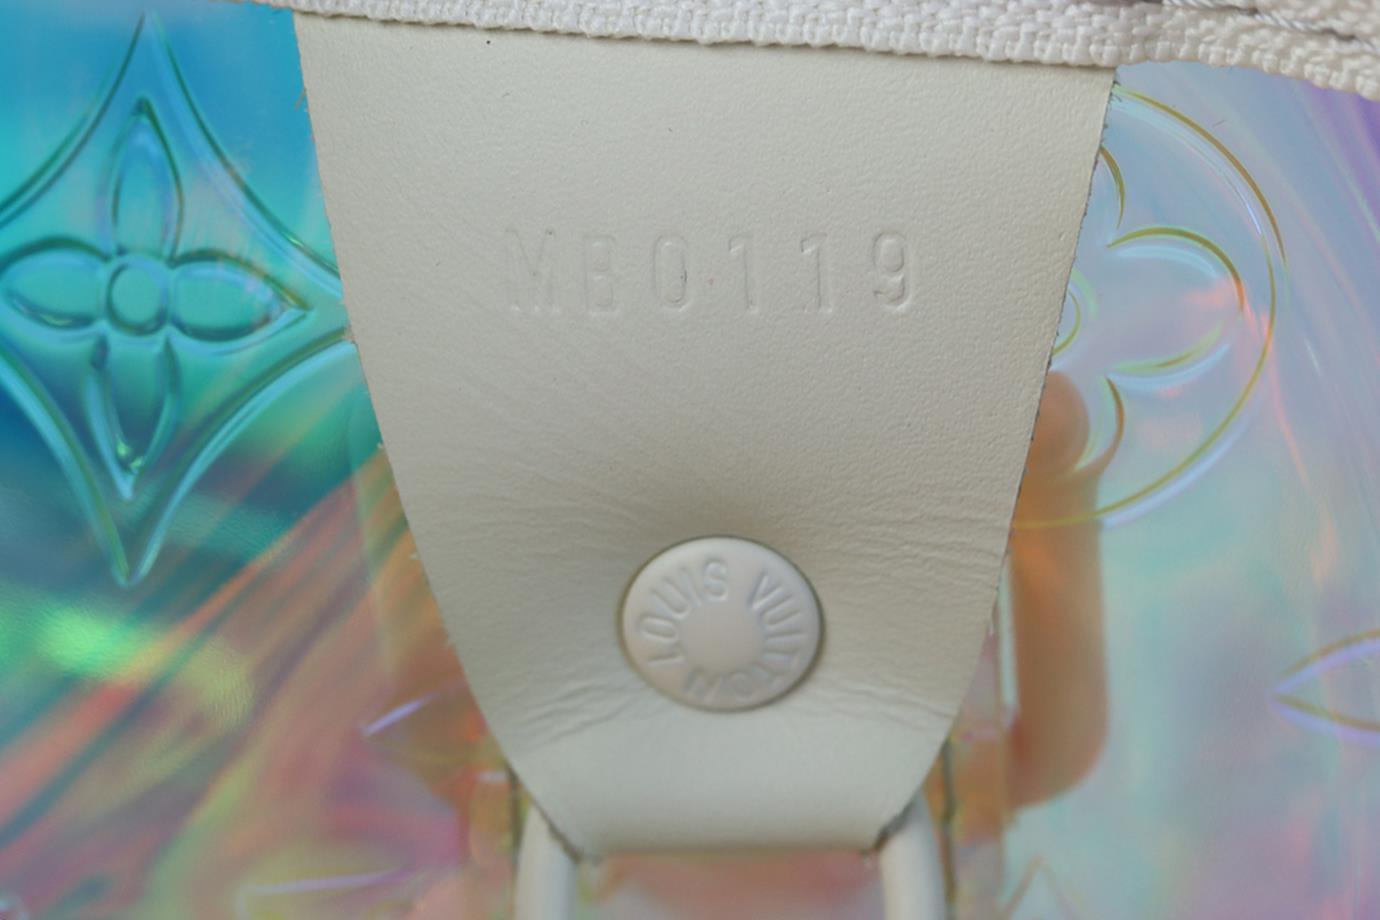 Louis Vuitton Keepall 50 Virgil Abloh Prism Bandouliere Boston Bag M53271